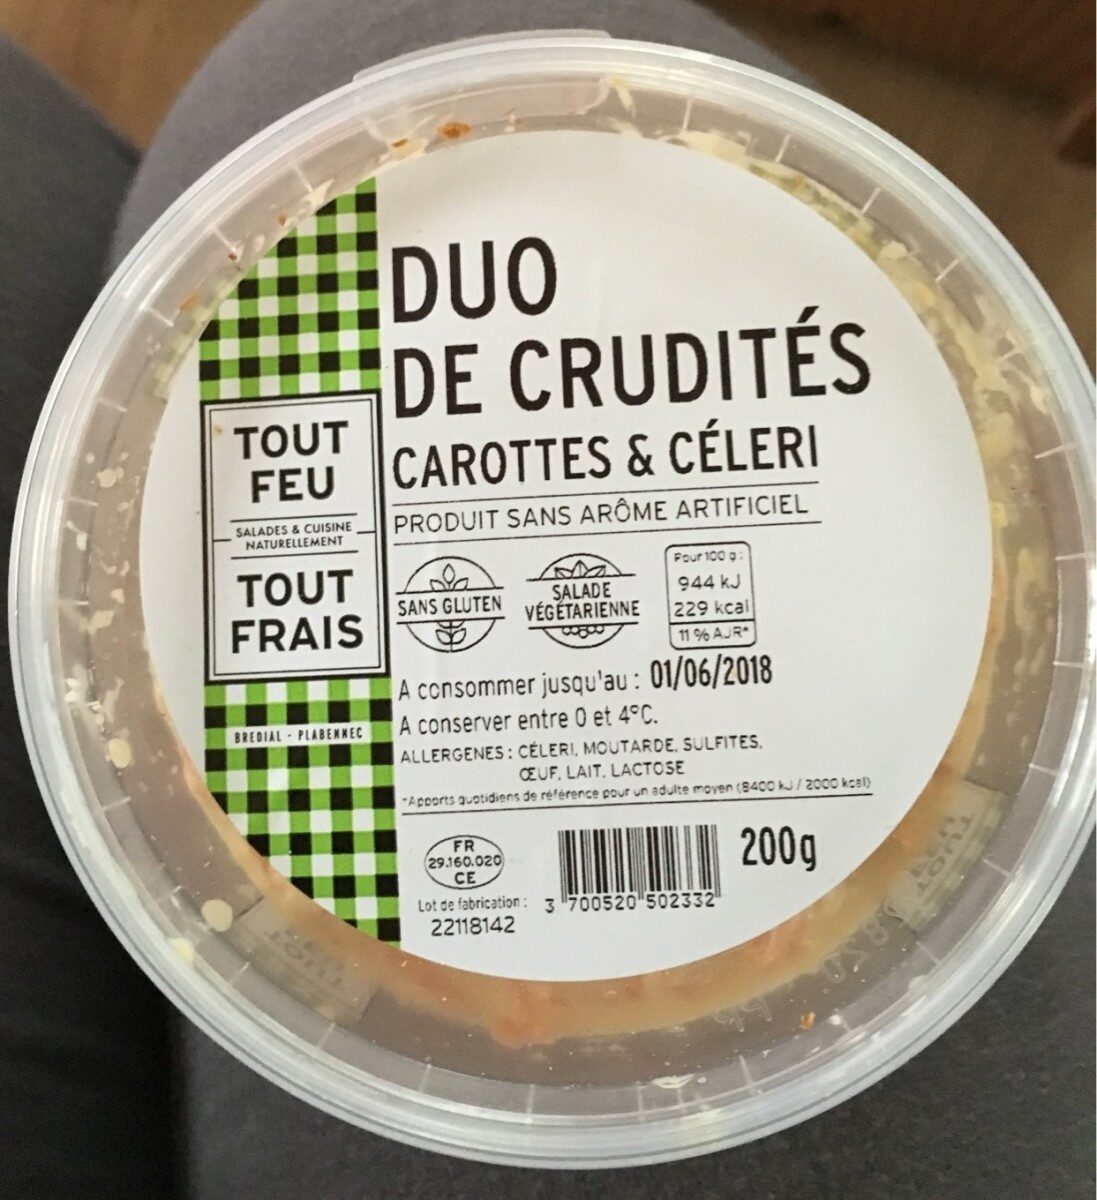 Duo de crudités carottes & céleri - Product - fr